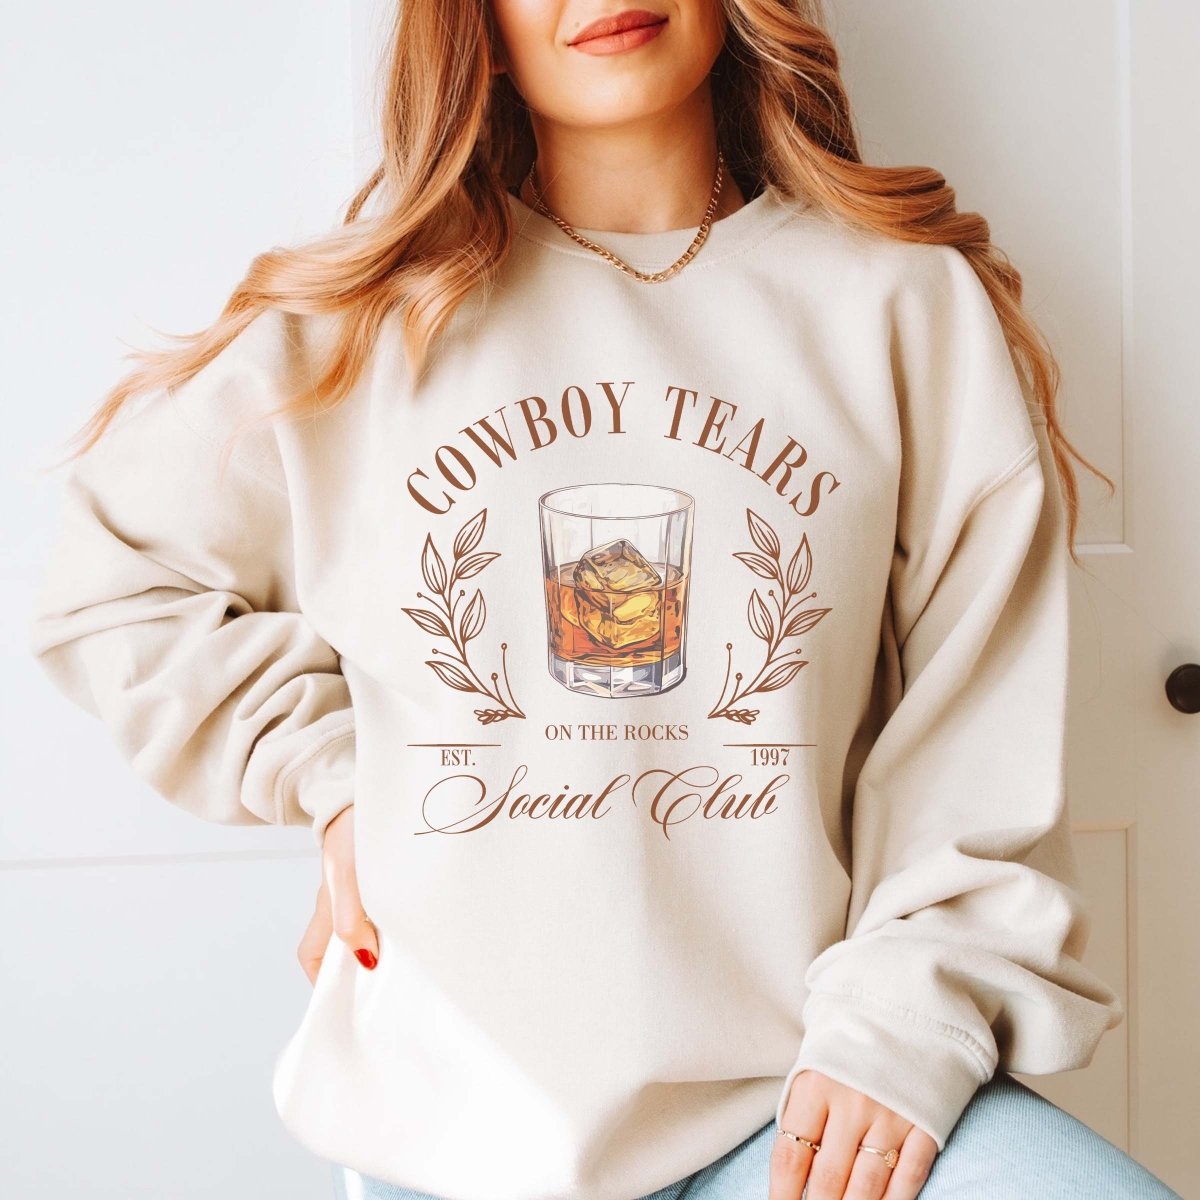 Cowboy Tears Social Club Crew Sweatshirt - Limeberry Designs